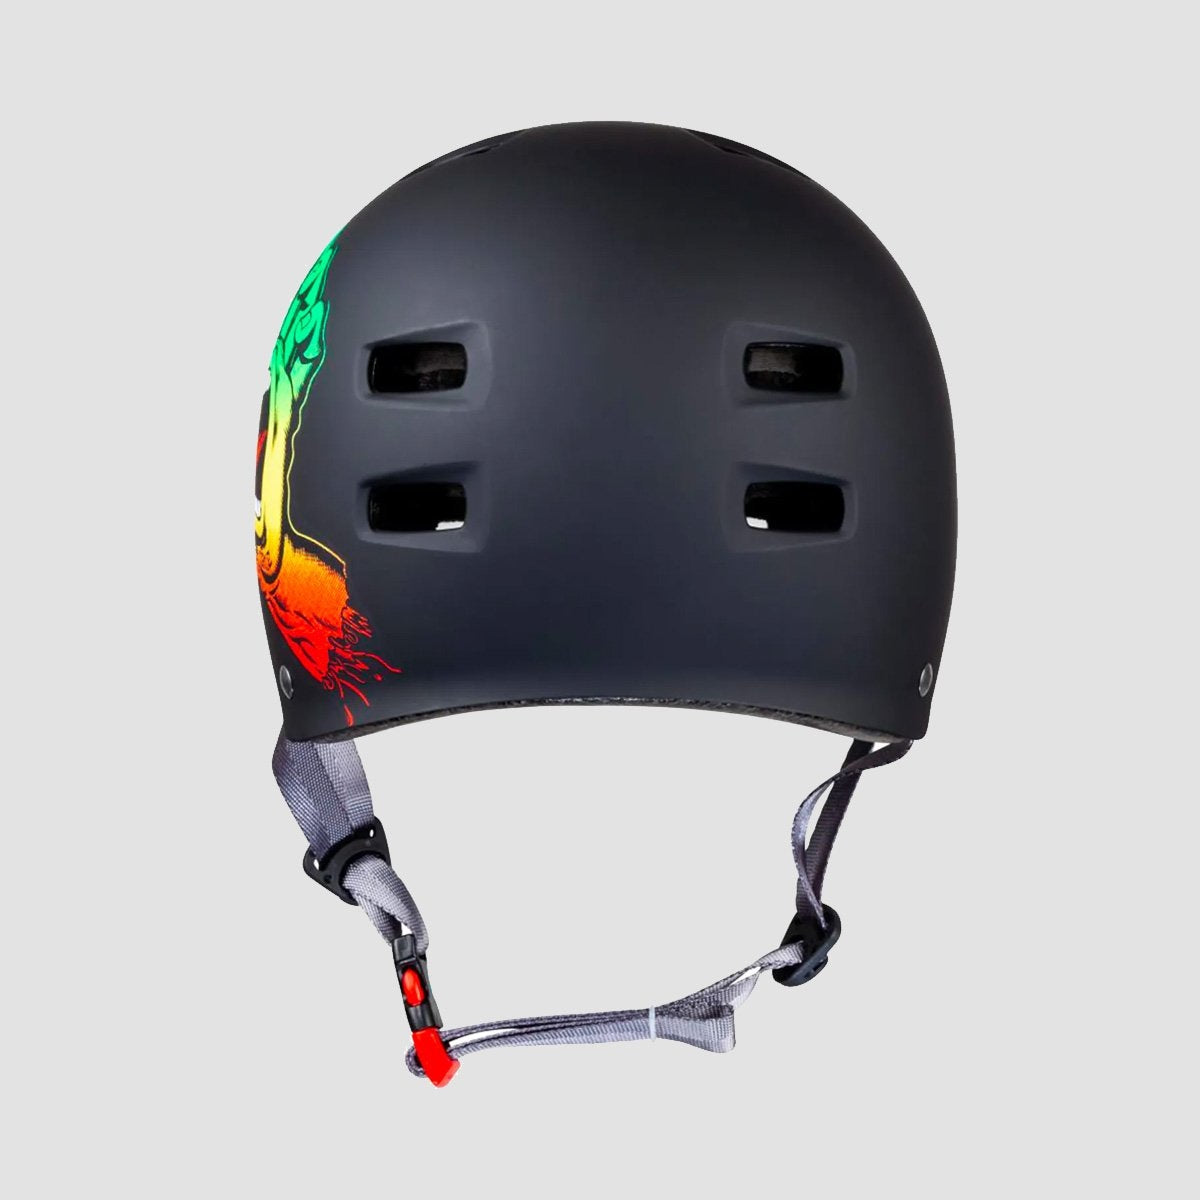 Bullet x Santa Cruz Screaming Hand Skate/Bmx Helmet Rasta - Safety Gear